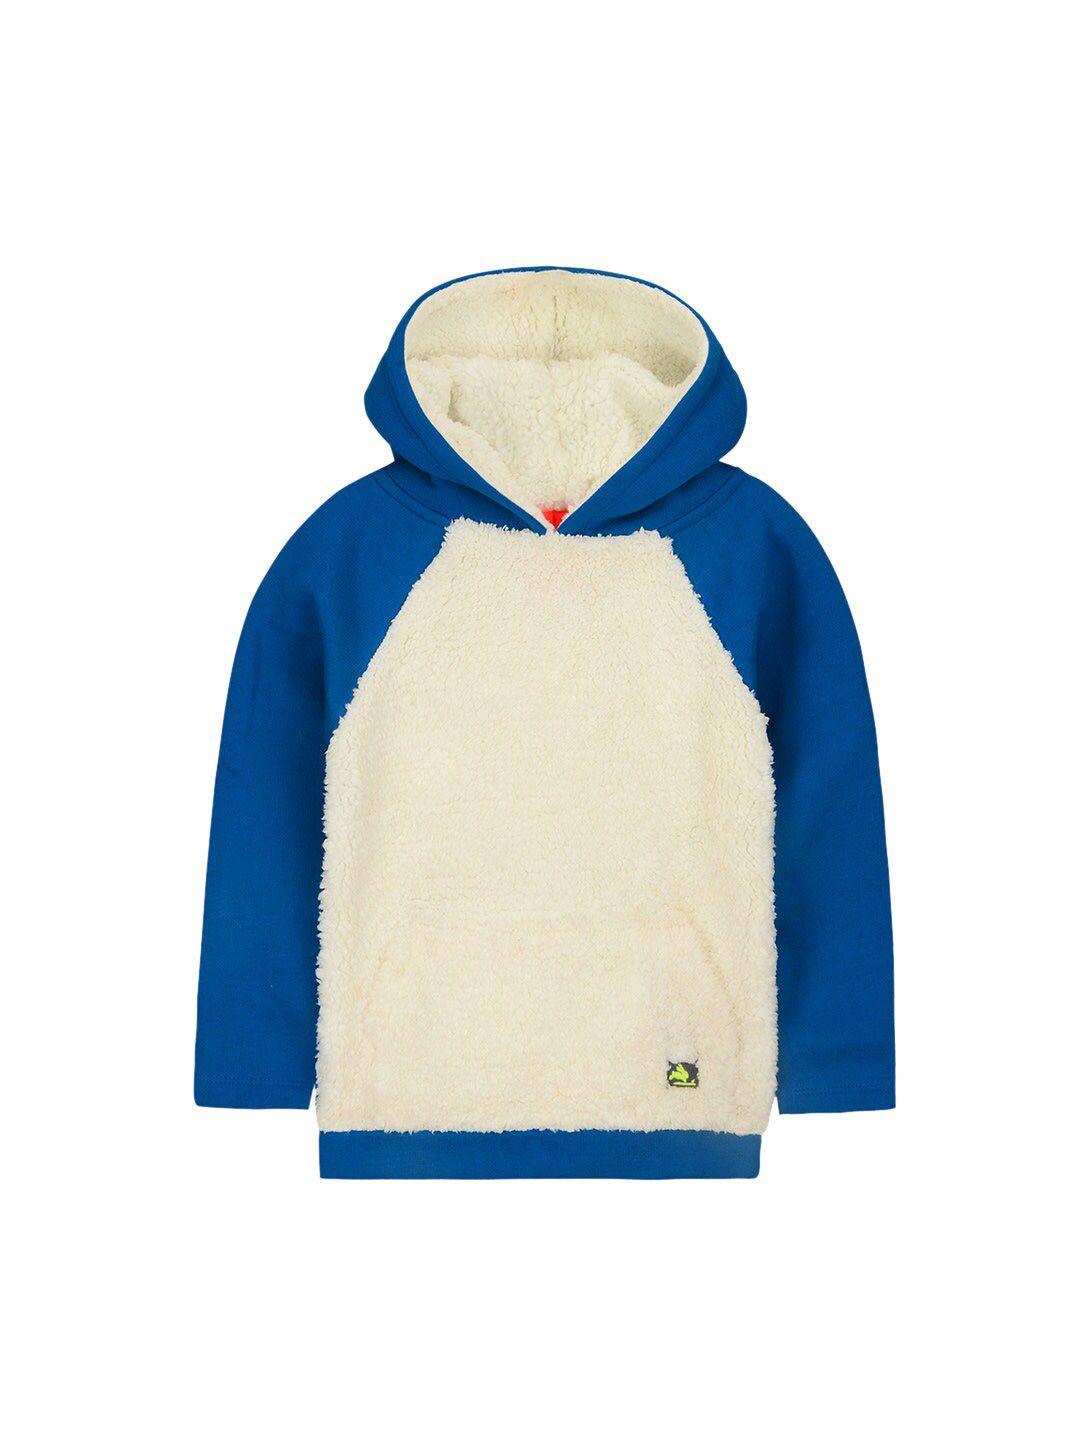 cherry crumble unisex kids navy blue colourblocked hooded sweatshirt